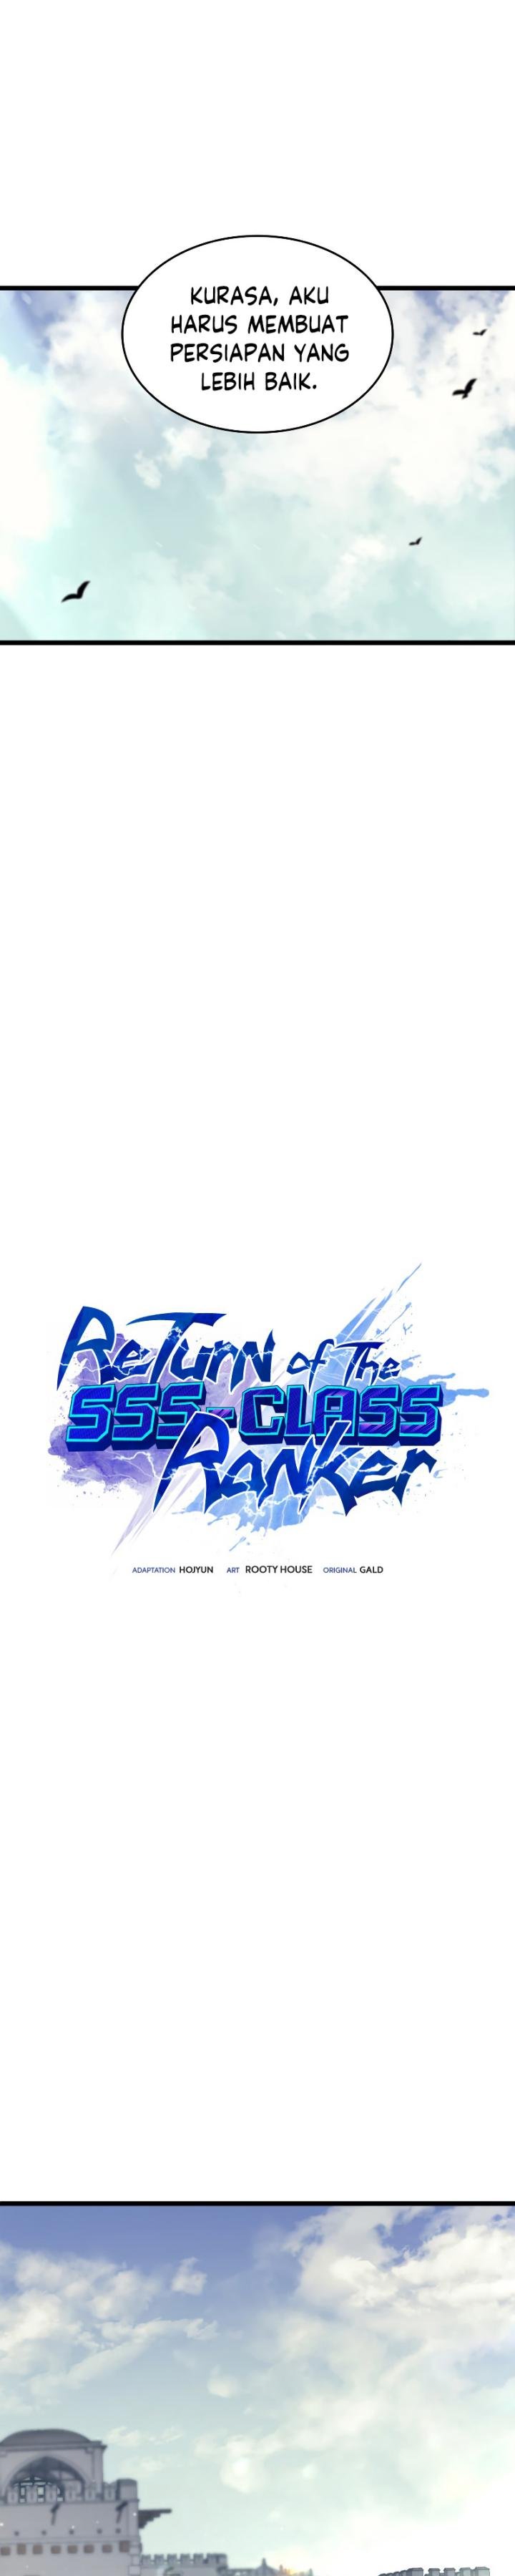 Return Of The Sss-Class Ranker Chapter 33 - 265